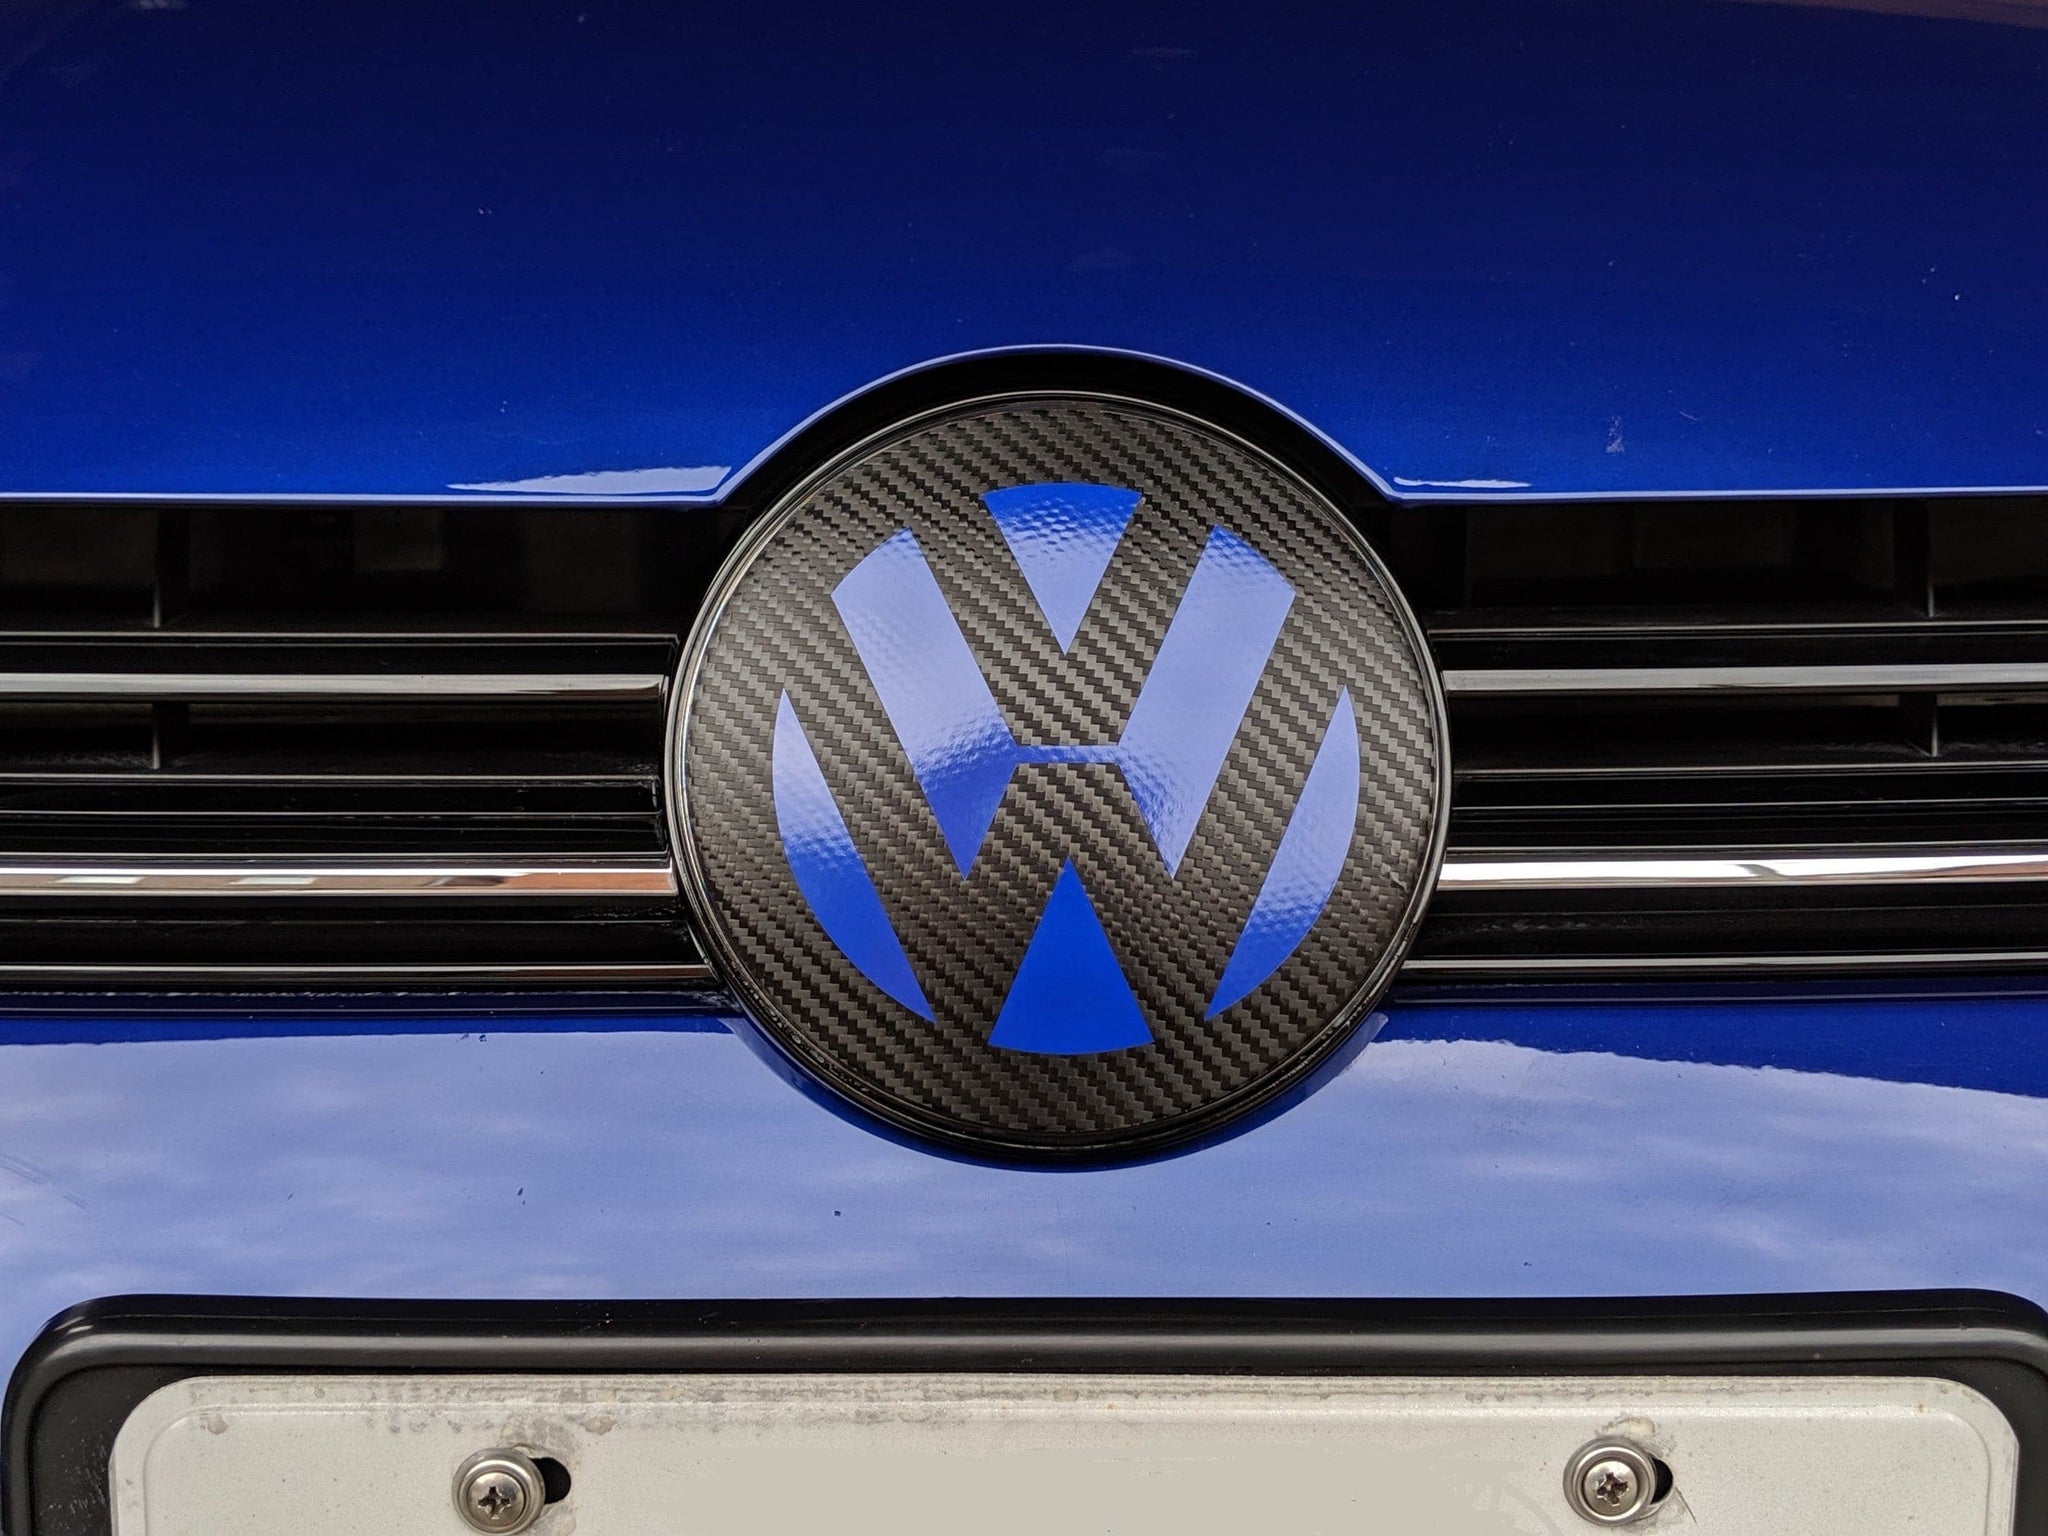 2022+ (8th Gen) VW Golf - Front VW w/ ACC Emblem Overlay - Original VW Design